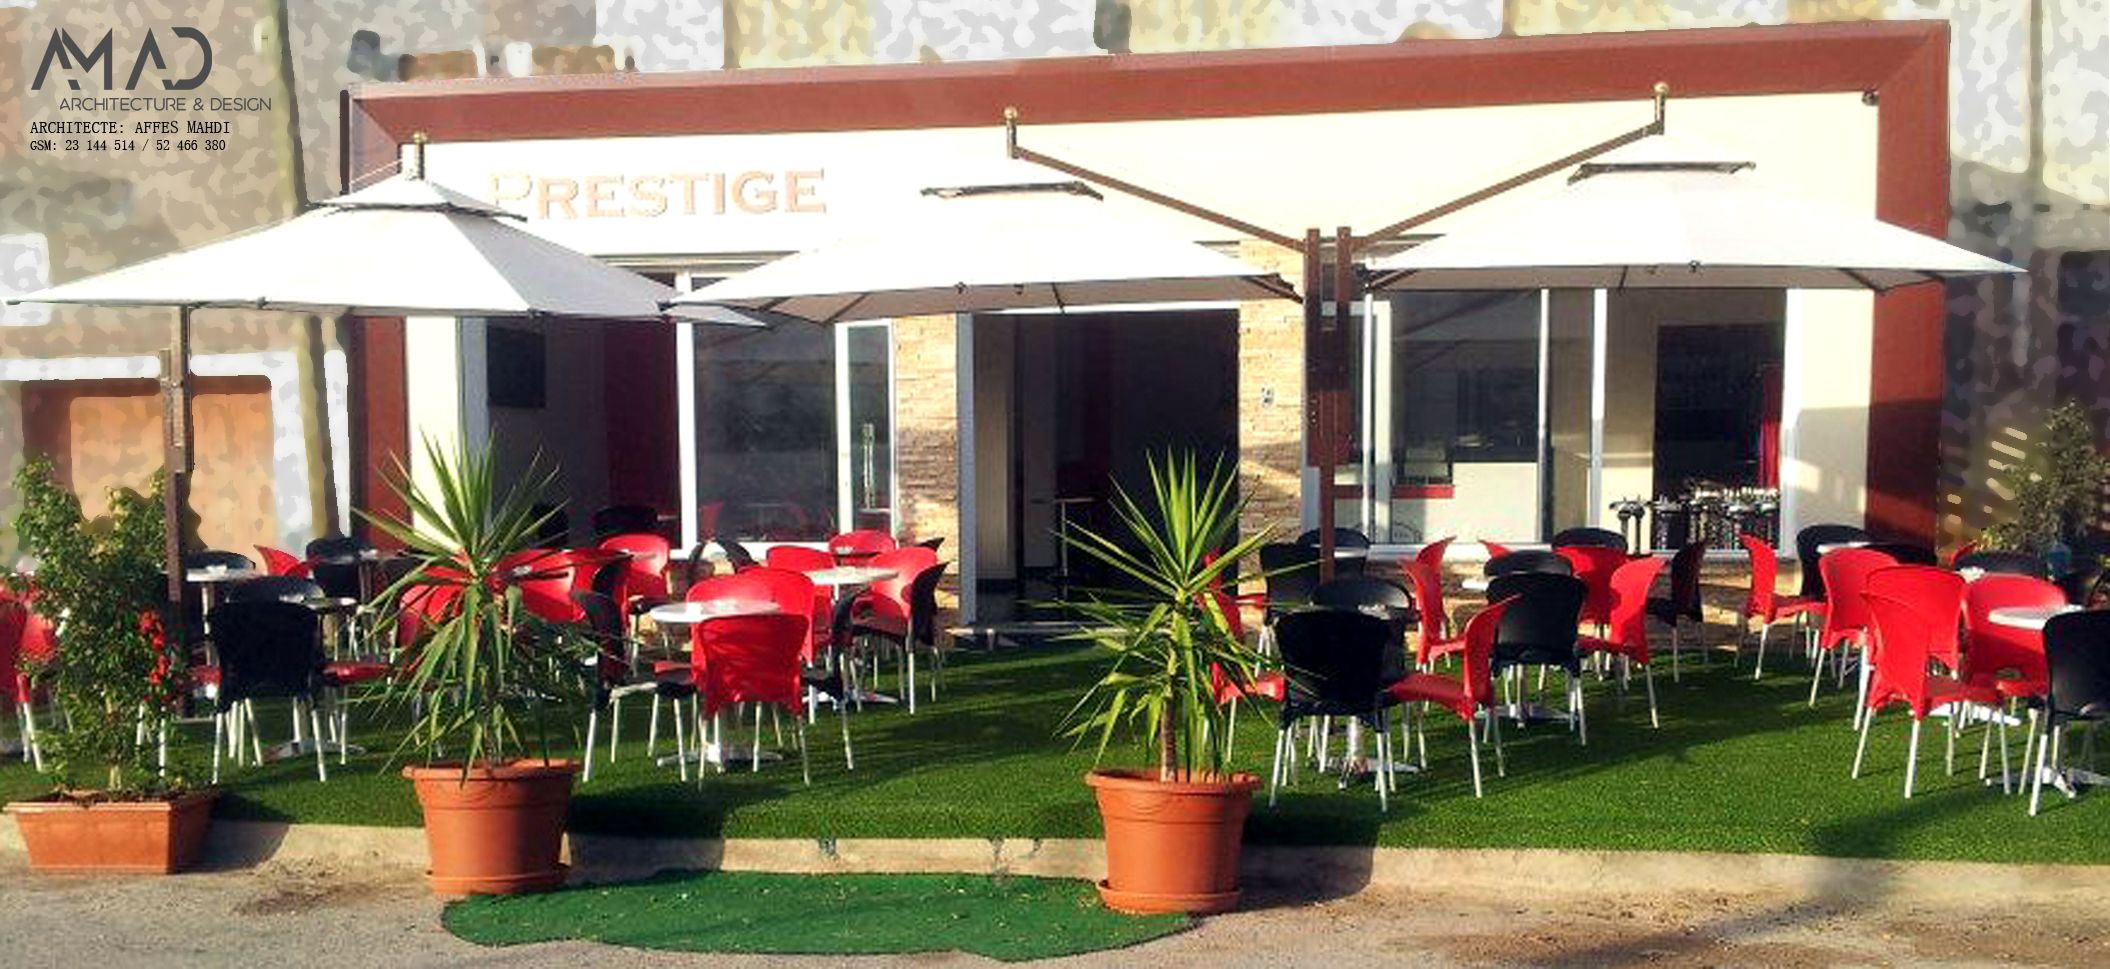 Café Prestige